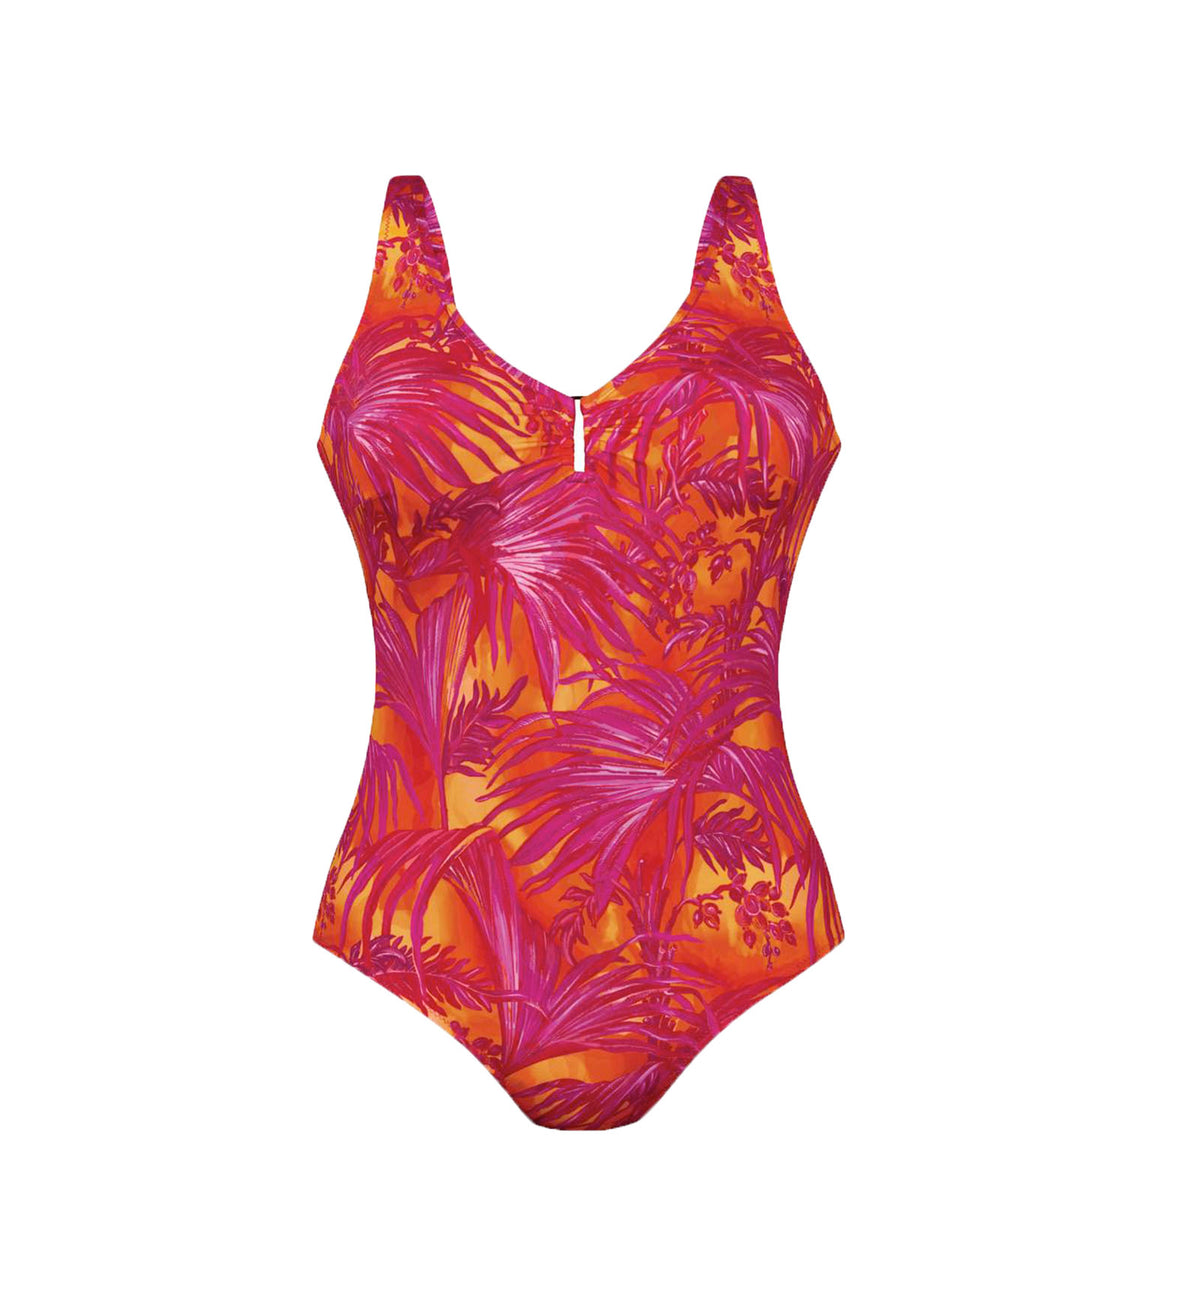 Anita Breezy Pink Camilla One Piece Swimsuit (7290),32D,Hydrangea - Hydrangea,32D